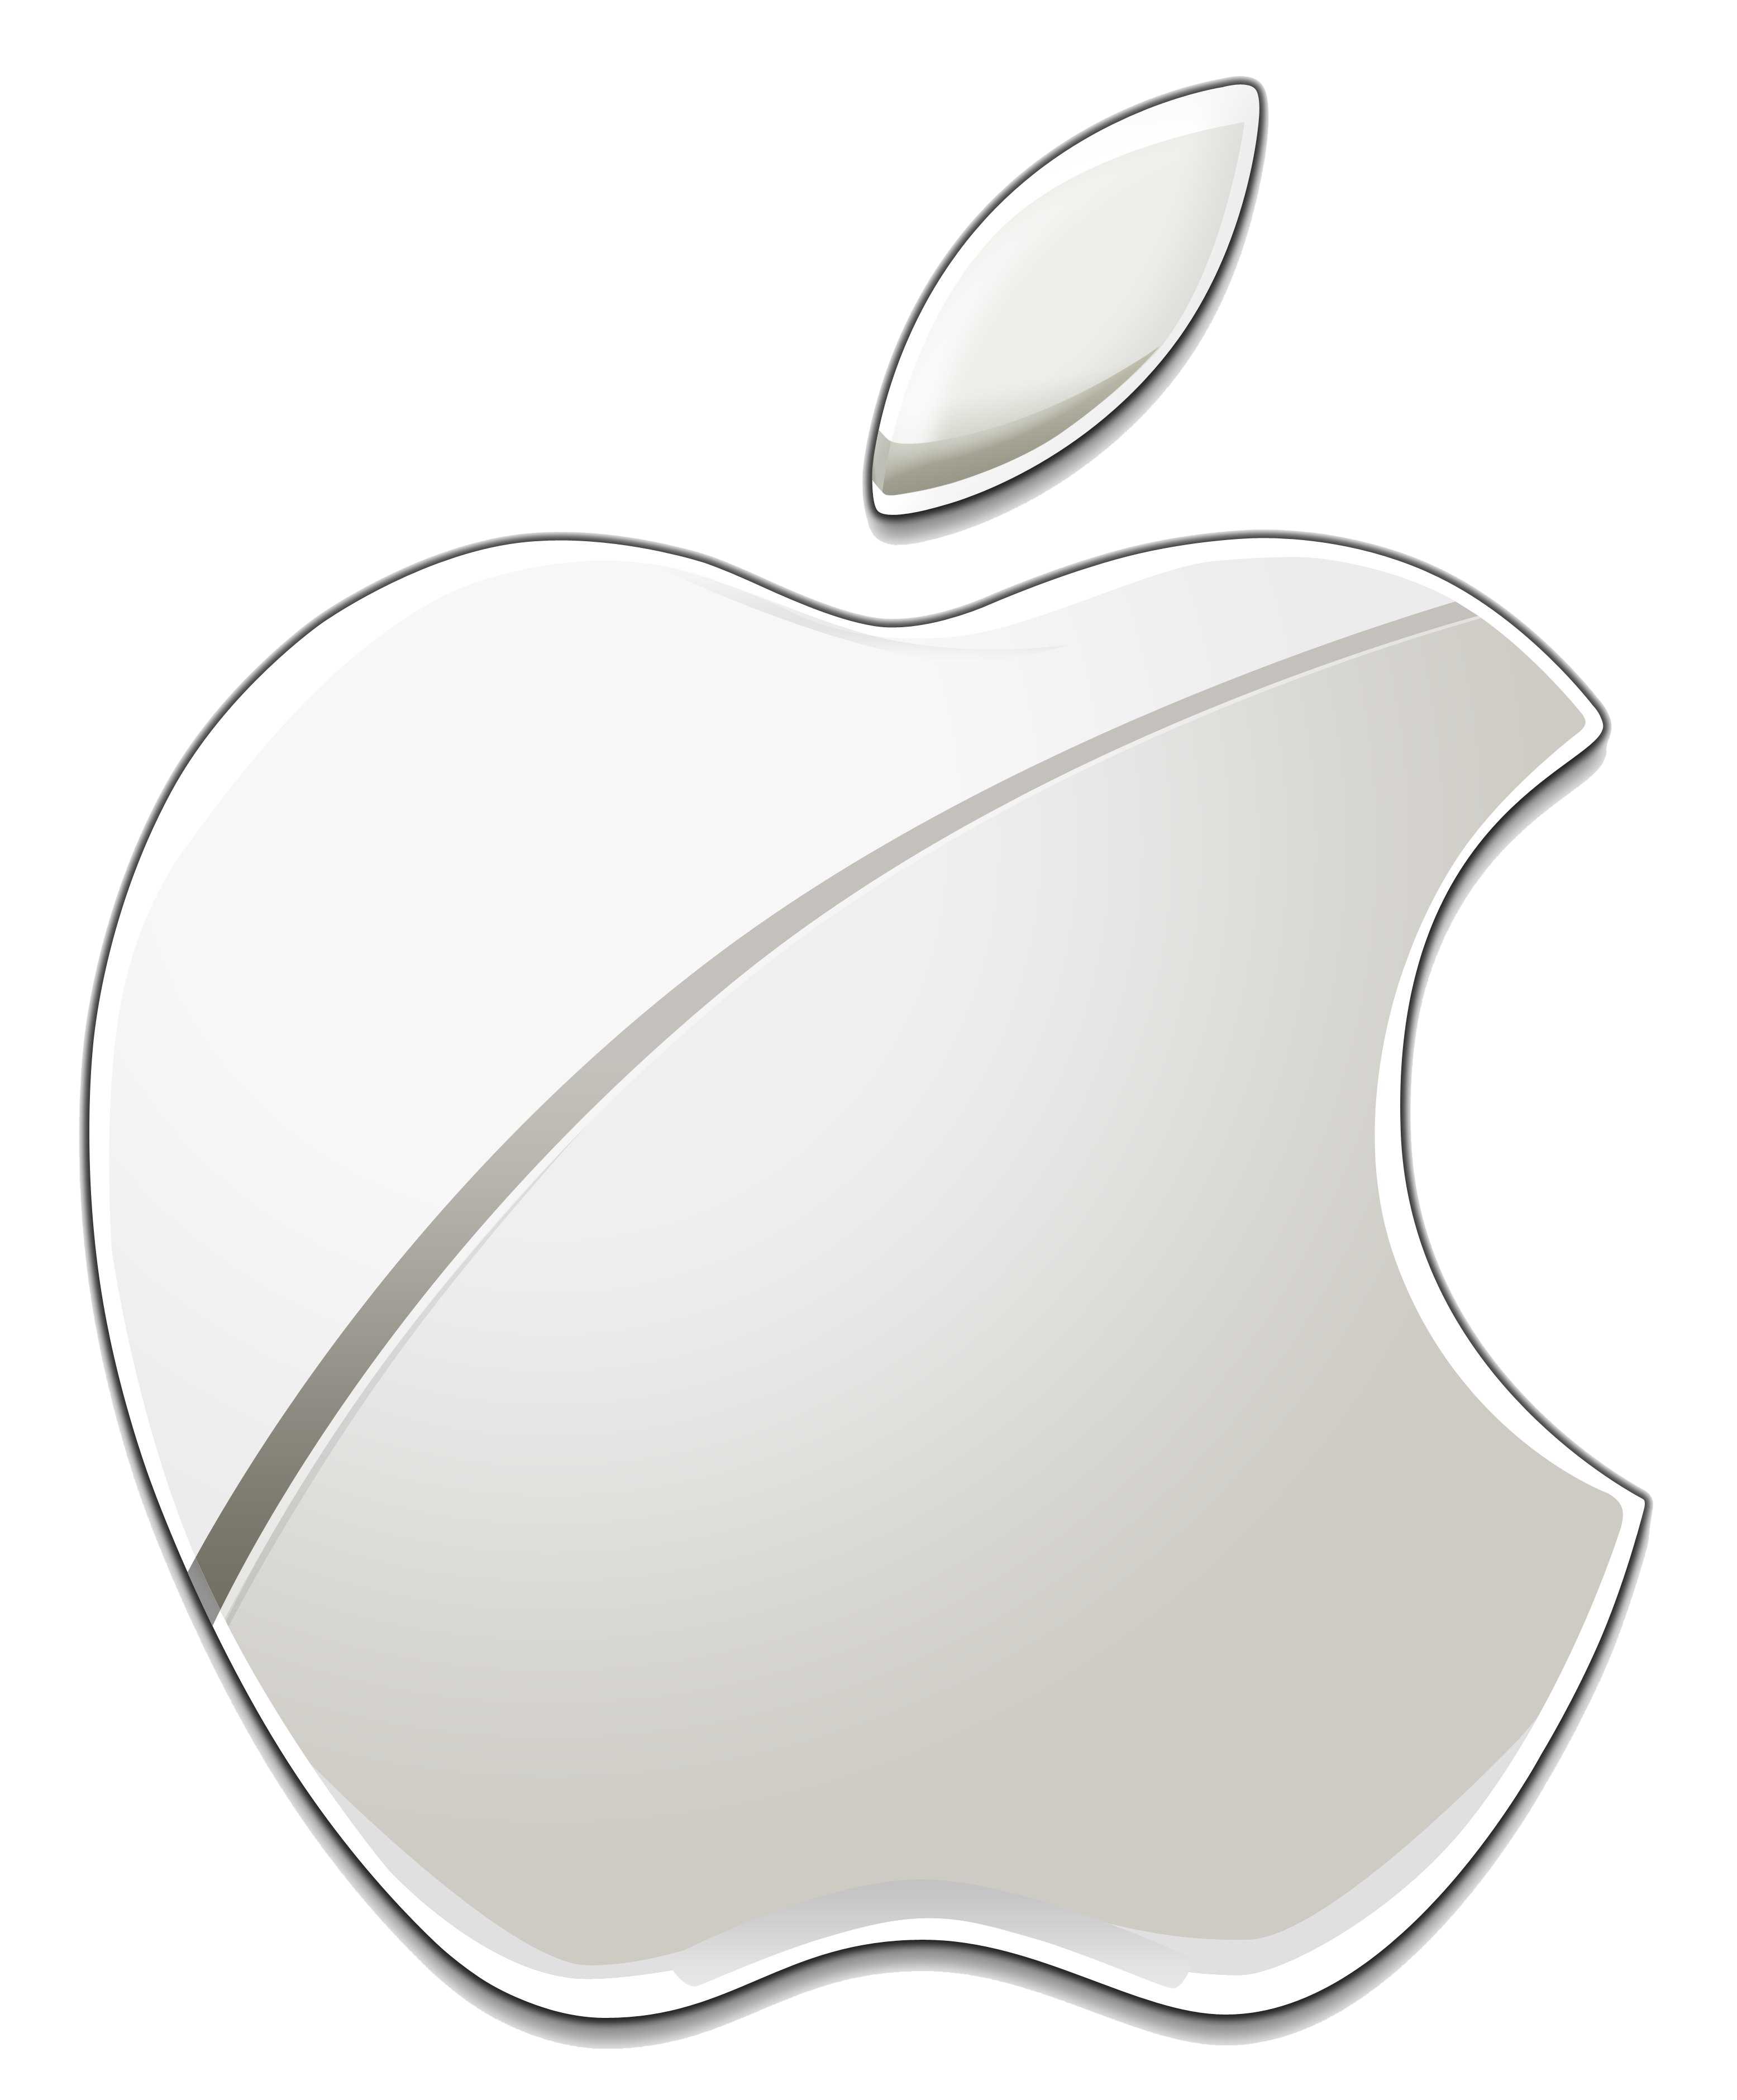 White Apple Logo PNG HD Quality